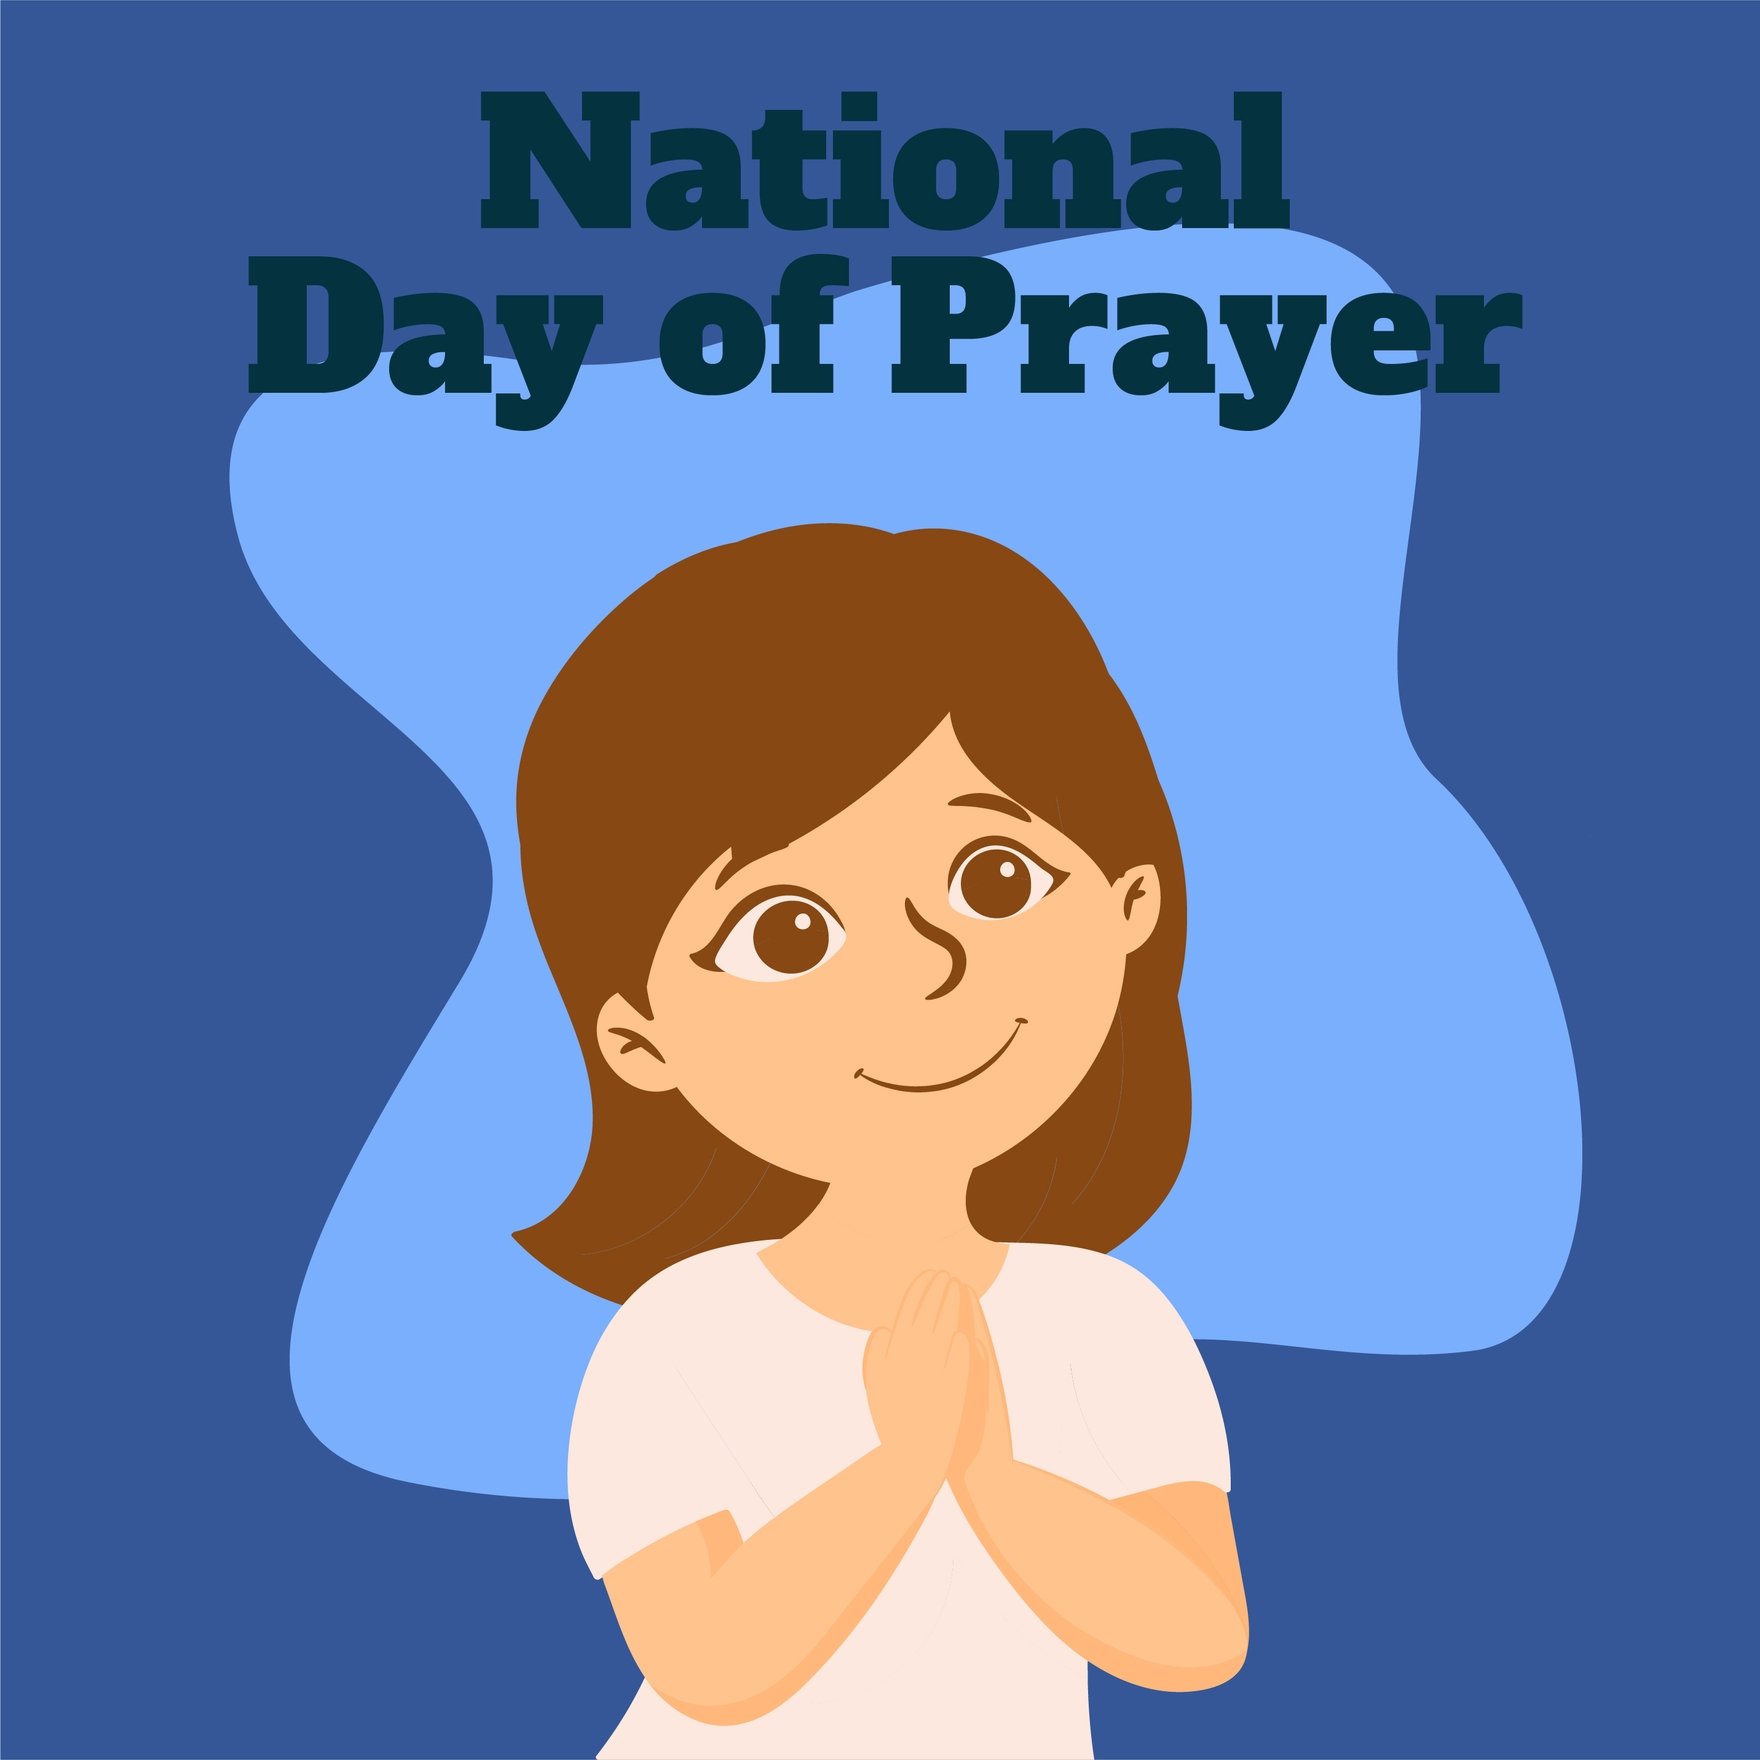 Free National Day of Prayer Cartoon Vector in Illustrator, PSD, EPS, SVG, JPG, PNG